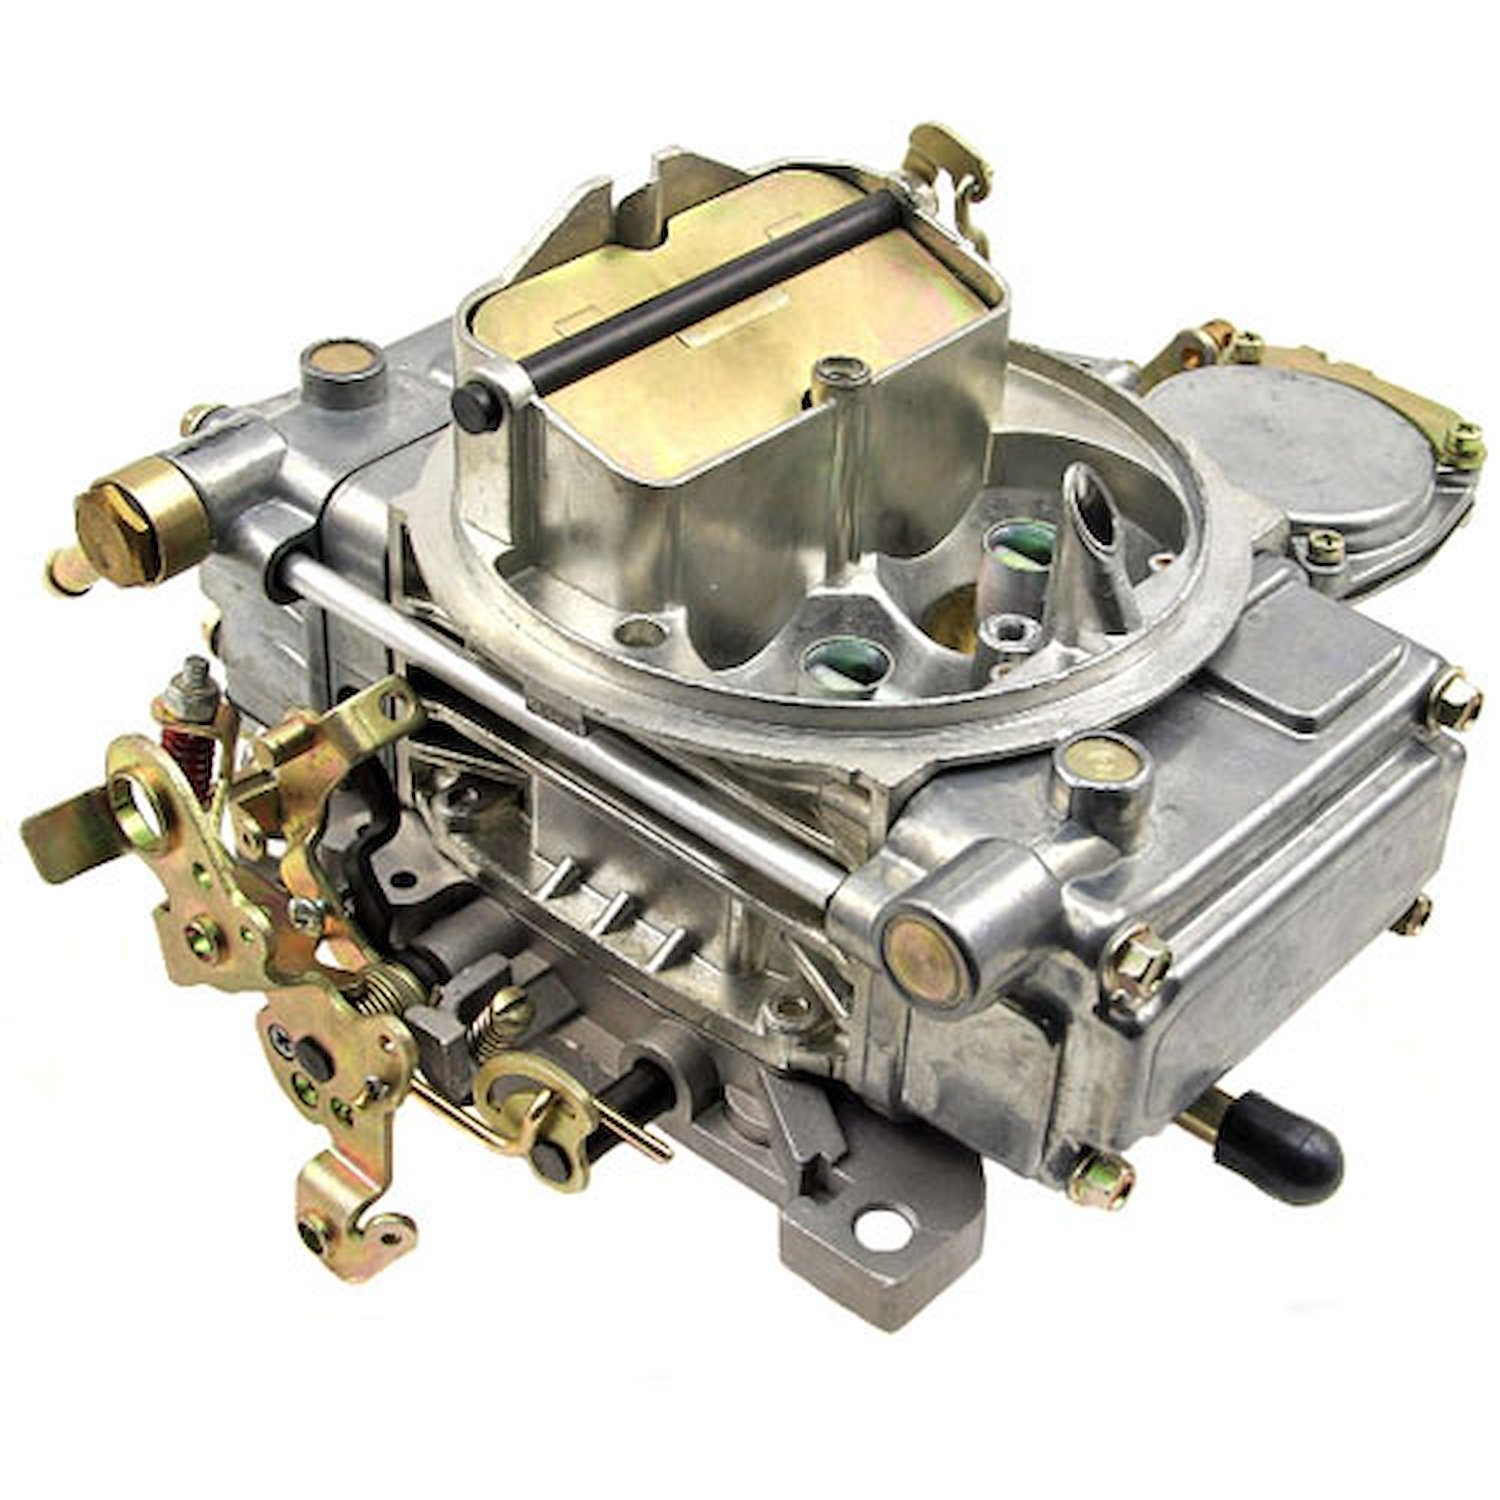 Complete 610 CFM Natural Finish 4-Bbl Vacuum Secondary Carburetor Built in USA